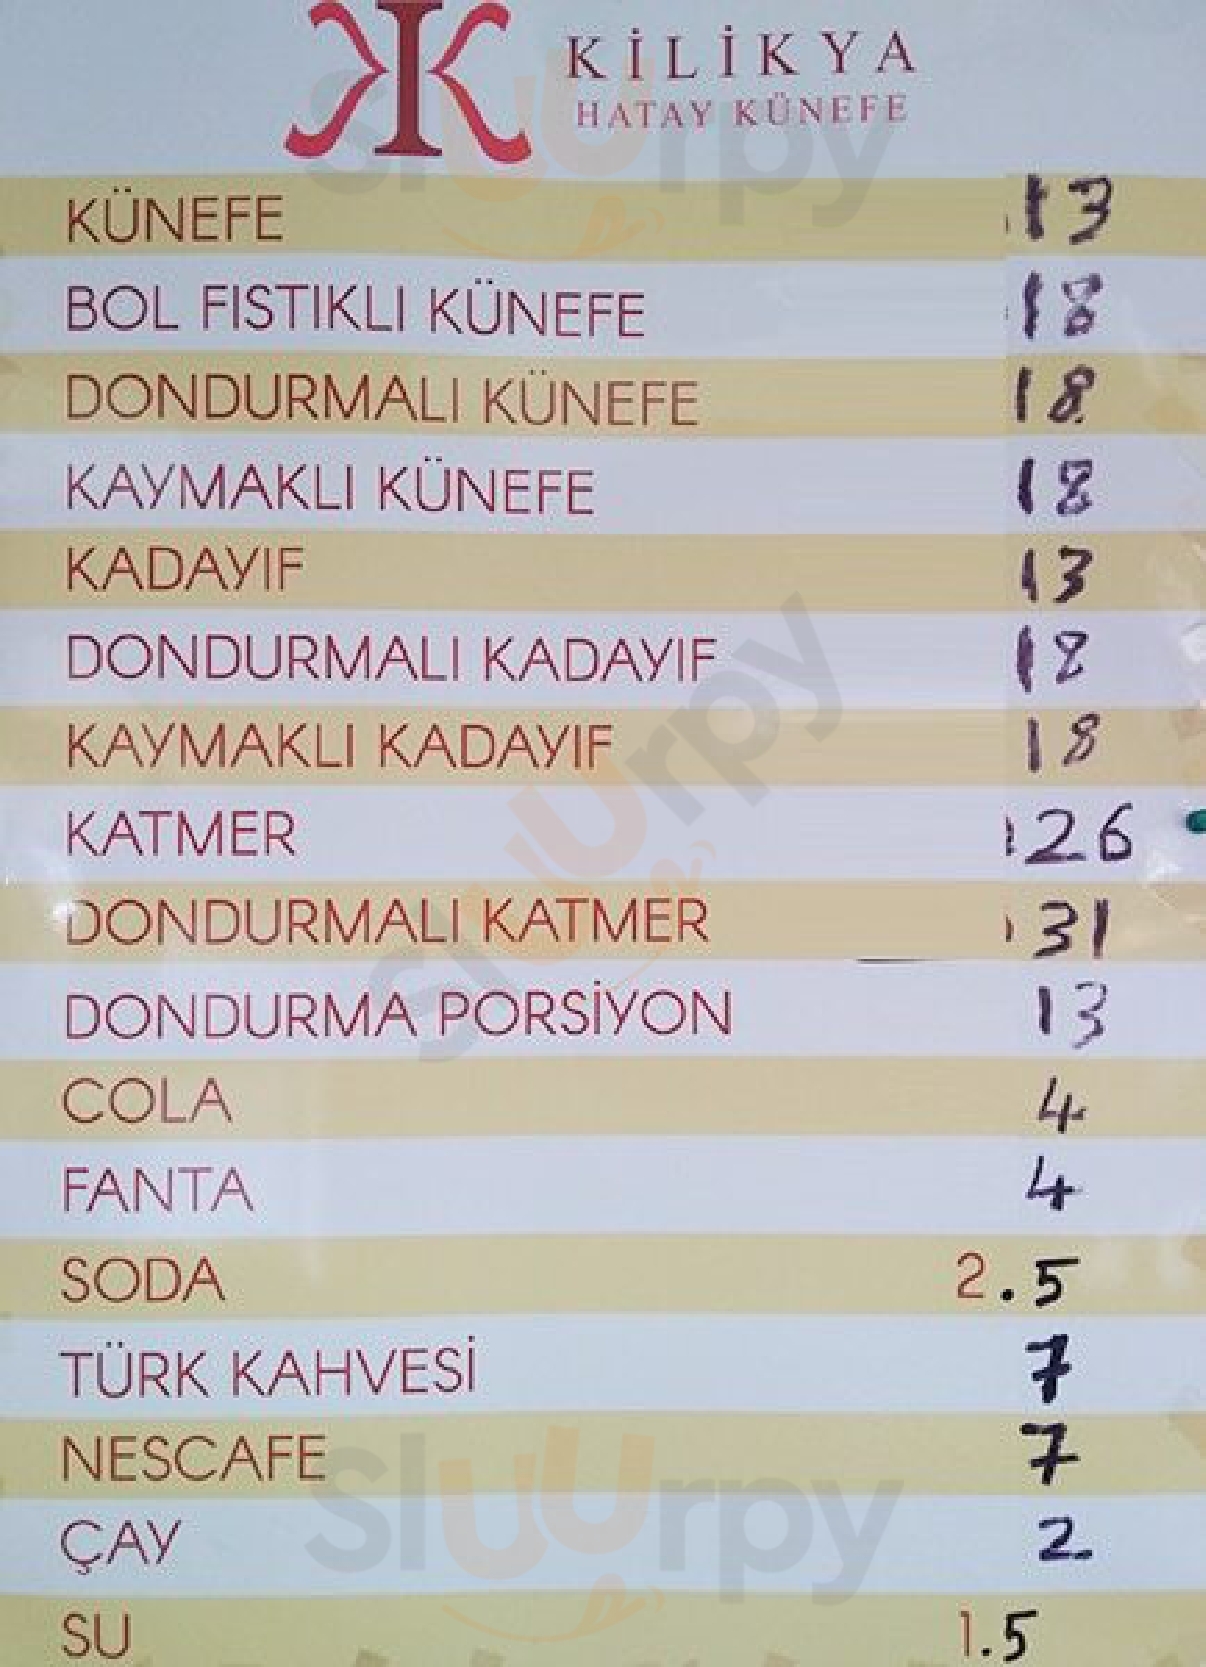 Kilikya Hatay Kunefe İstanbul Menu - 1